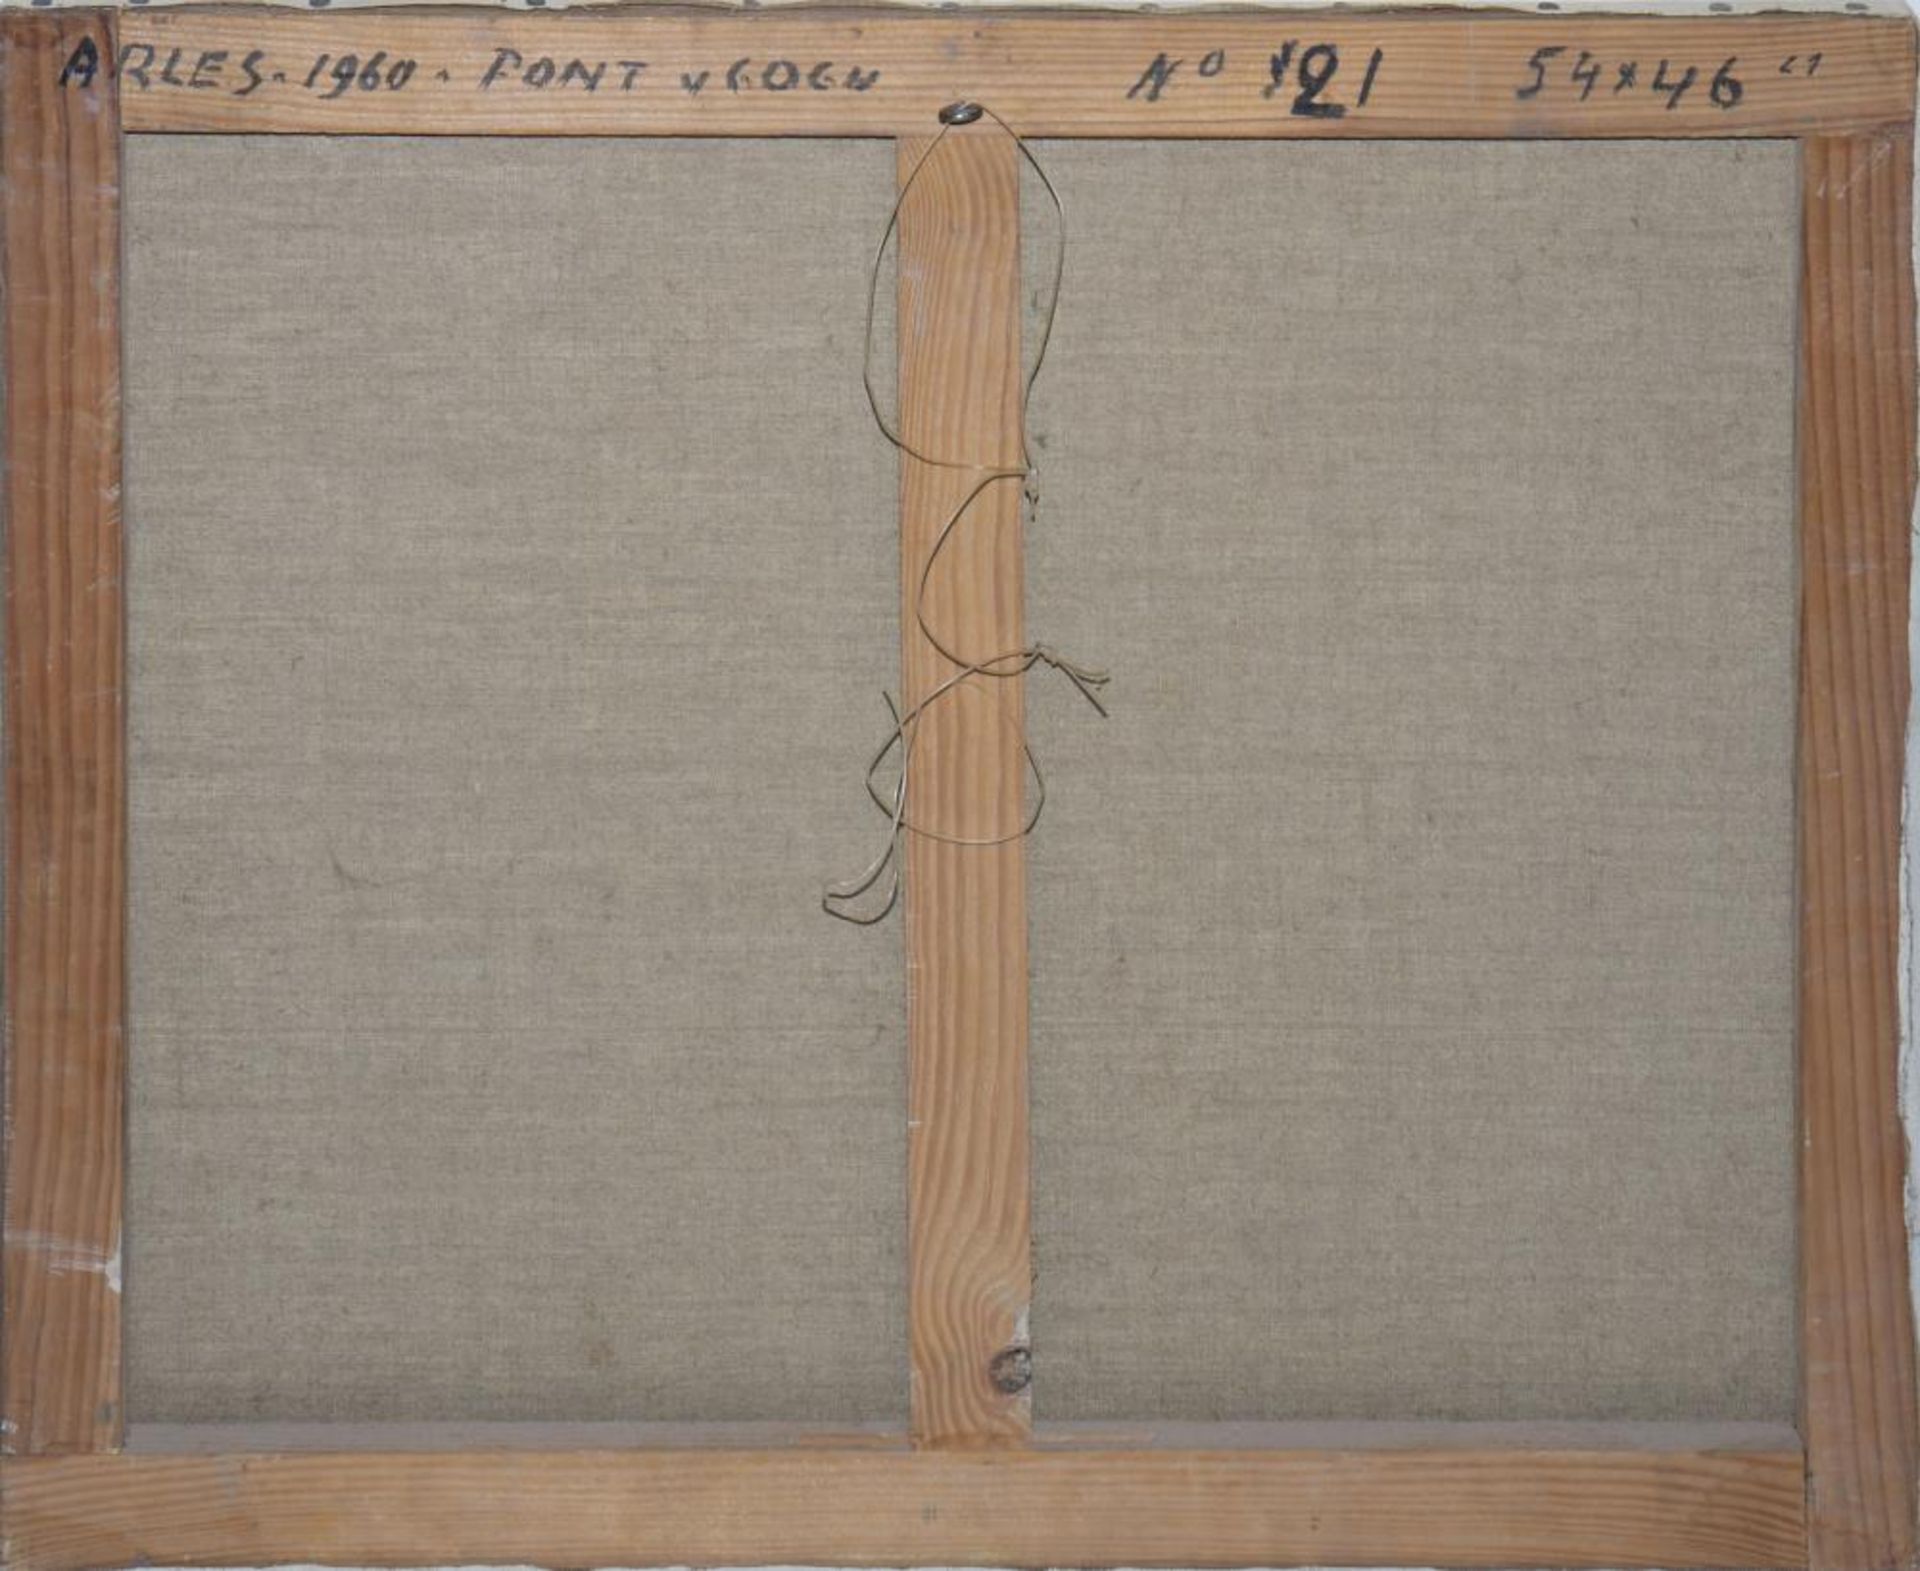 Pieter Van Mol, „Pont v. Gogh“, Ölgemälde, o. Rahmen, 1960 Pieter Van Mol, 1906 in Malderen, - Bild 2 aus 2